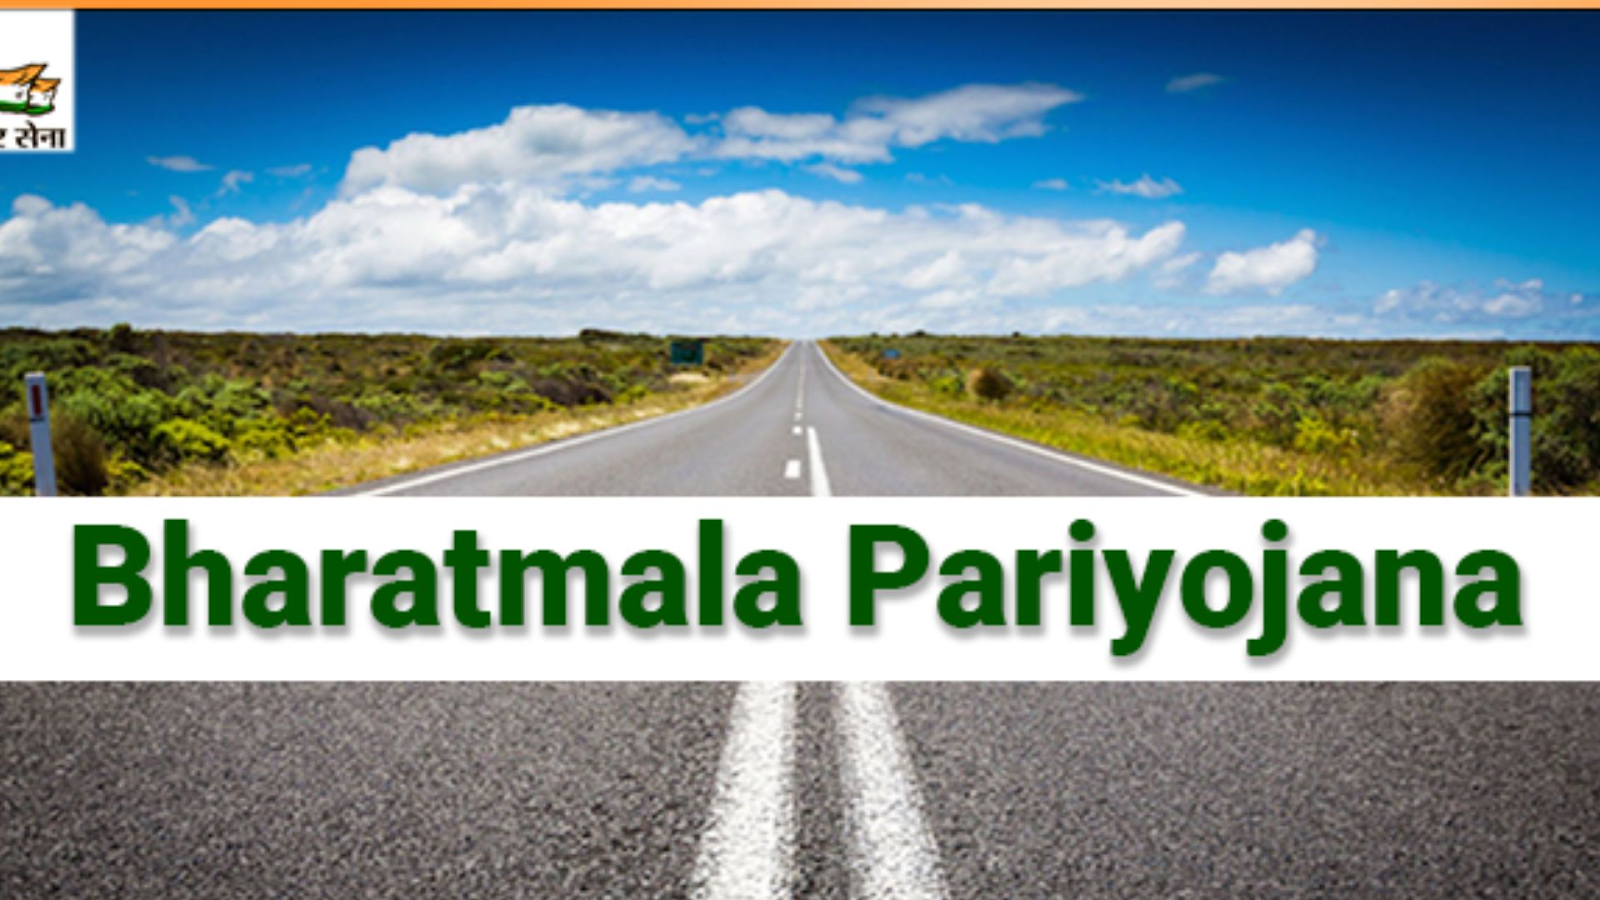 Bharatmala Pariyojana for the development of the roads in India